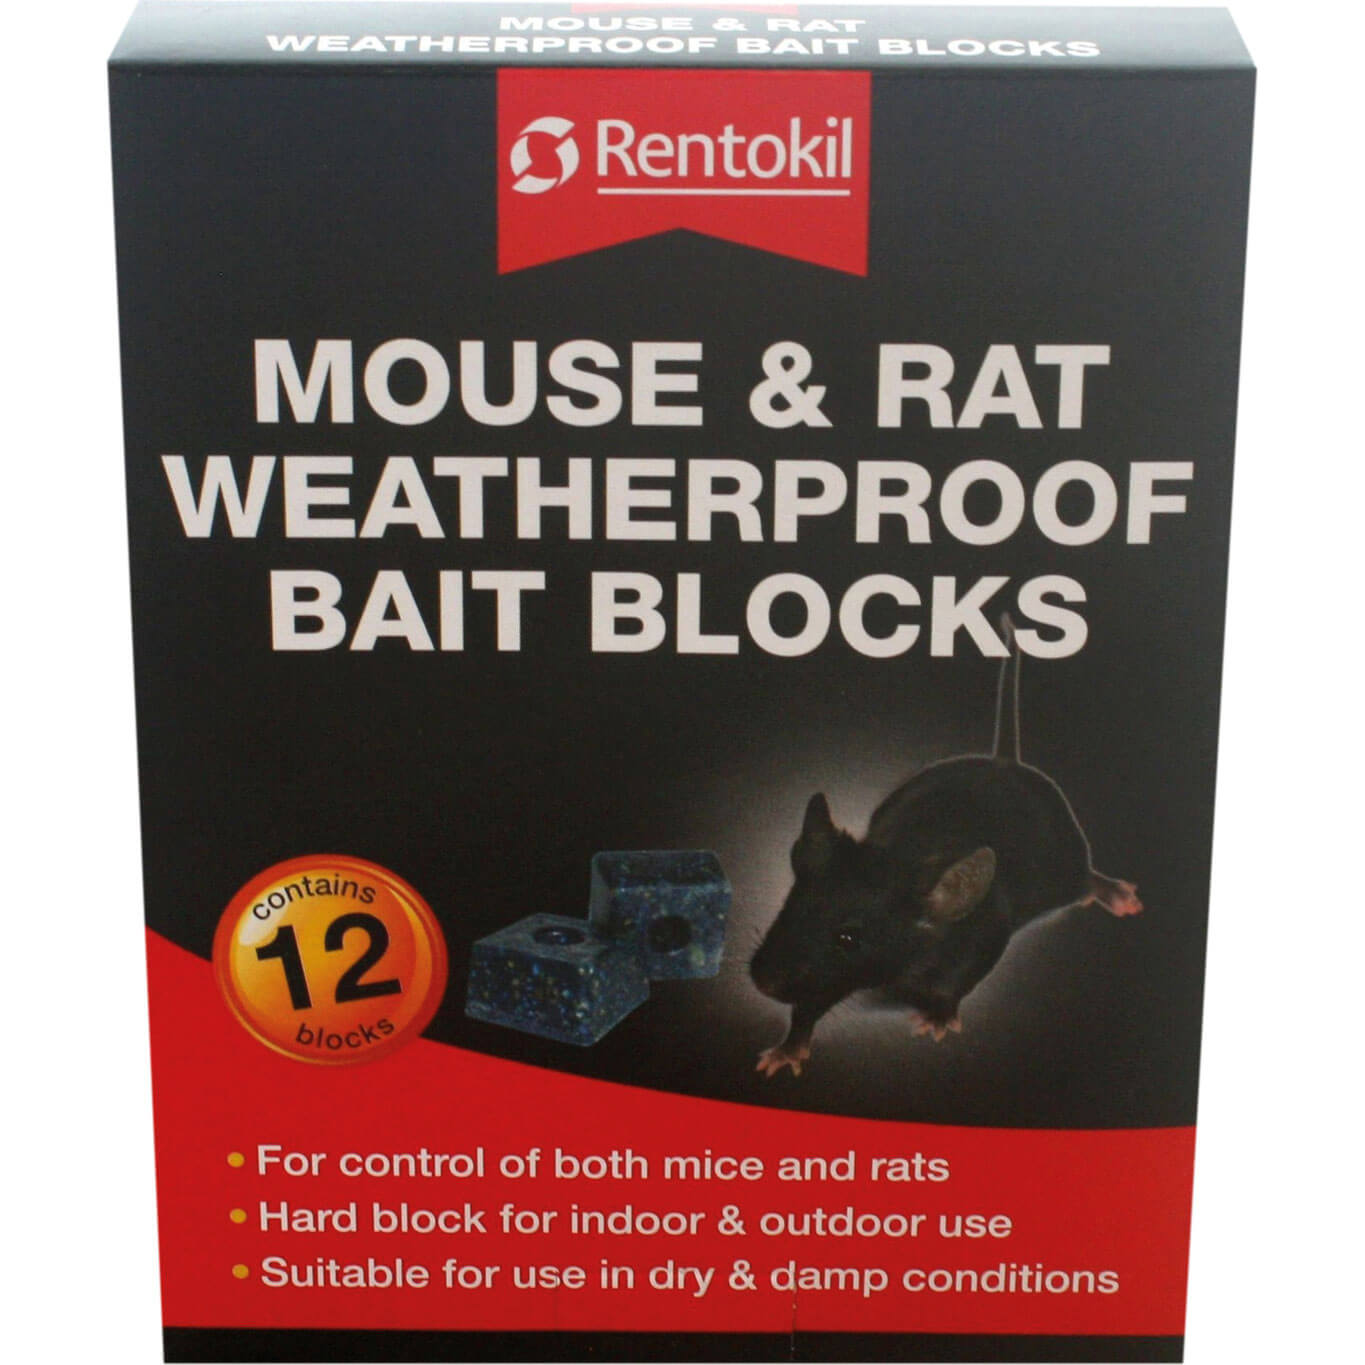 Rentokil Mouse & Rat Weatherproof Bait Blocks Pack of 12